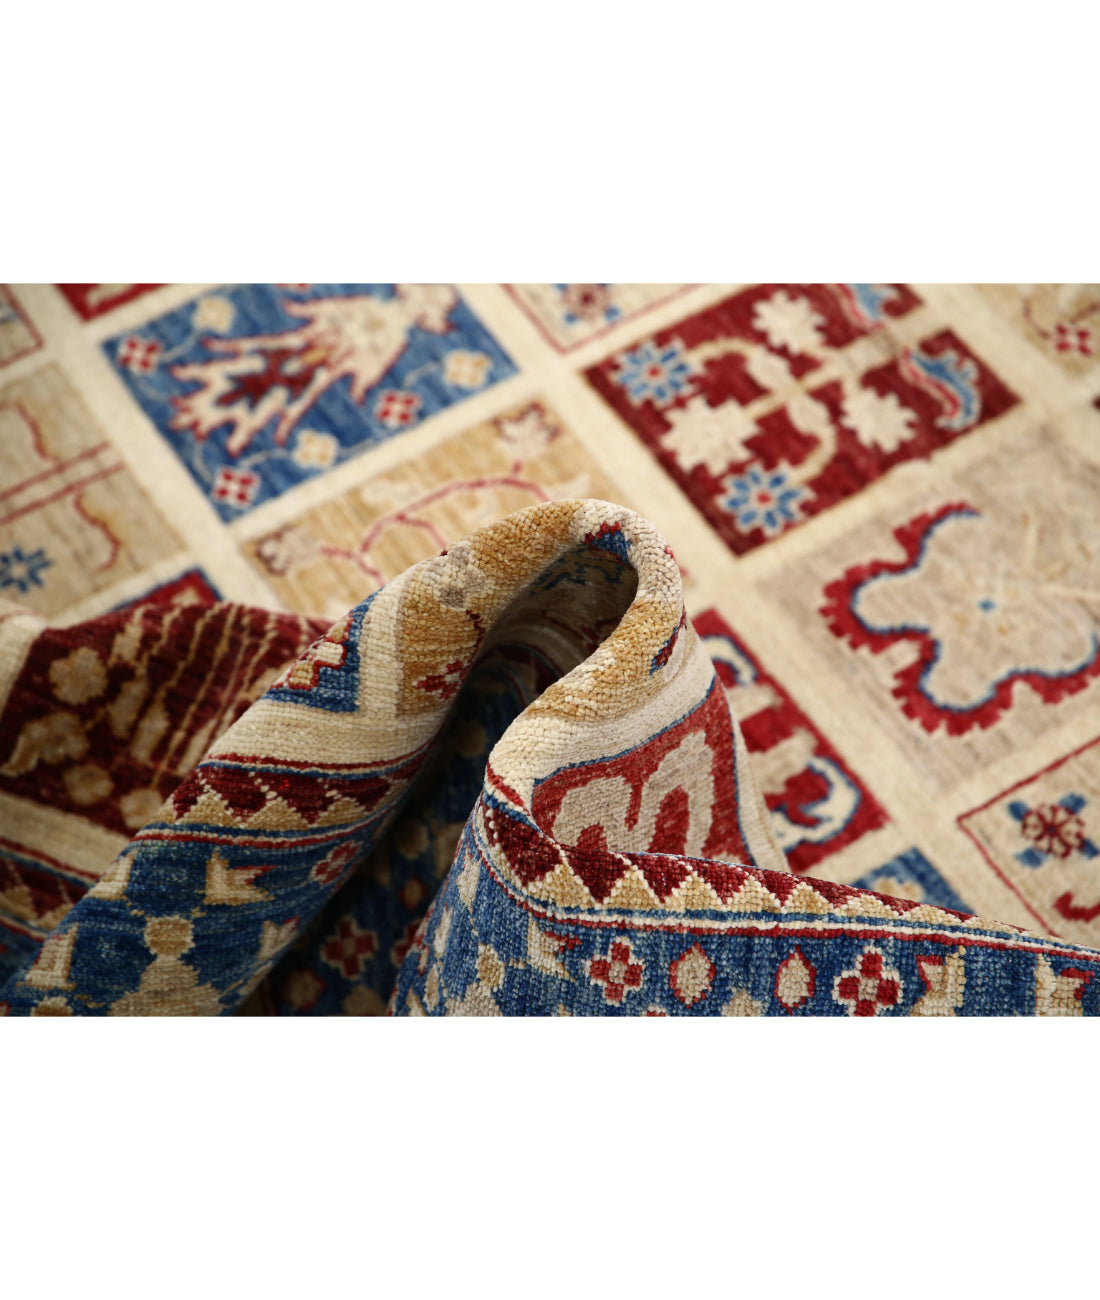 Hand Knotted Bakhtiari Wool Rug - 5'7'' x 7'8'' 5'7'' x 7'8'' (168 X 230) / Multi / Ivory